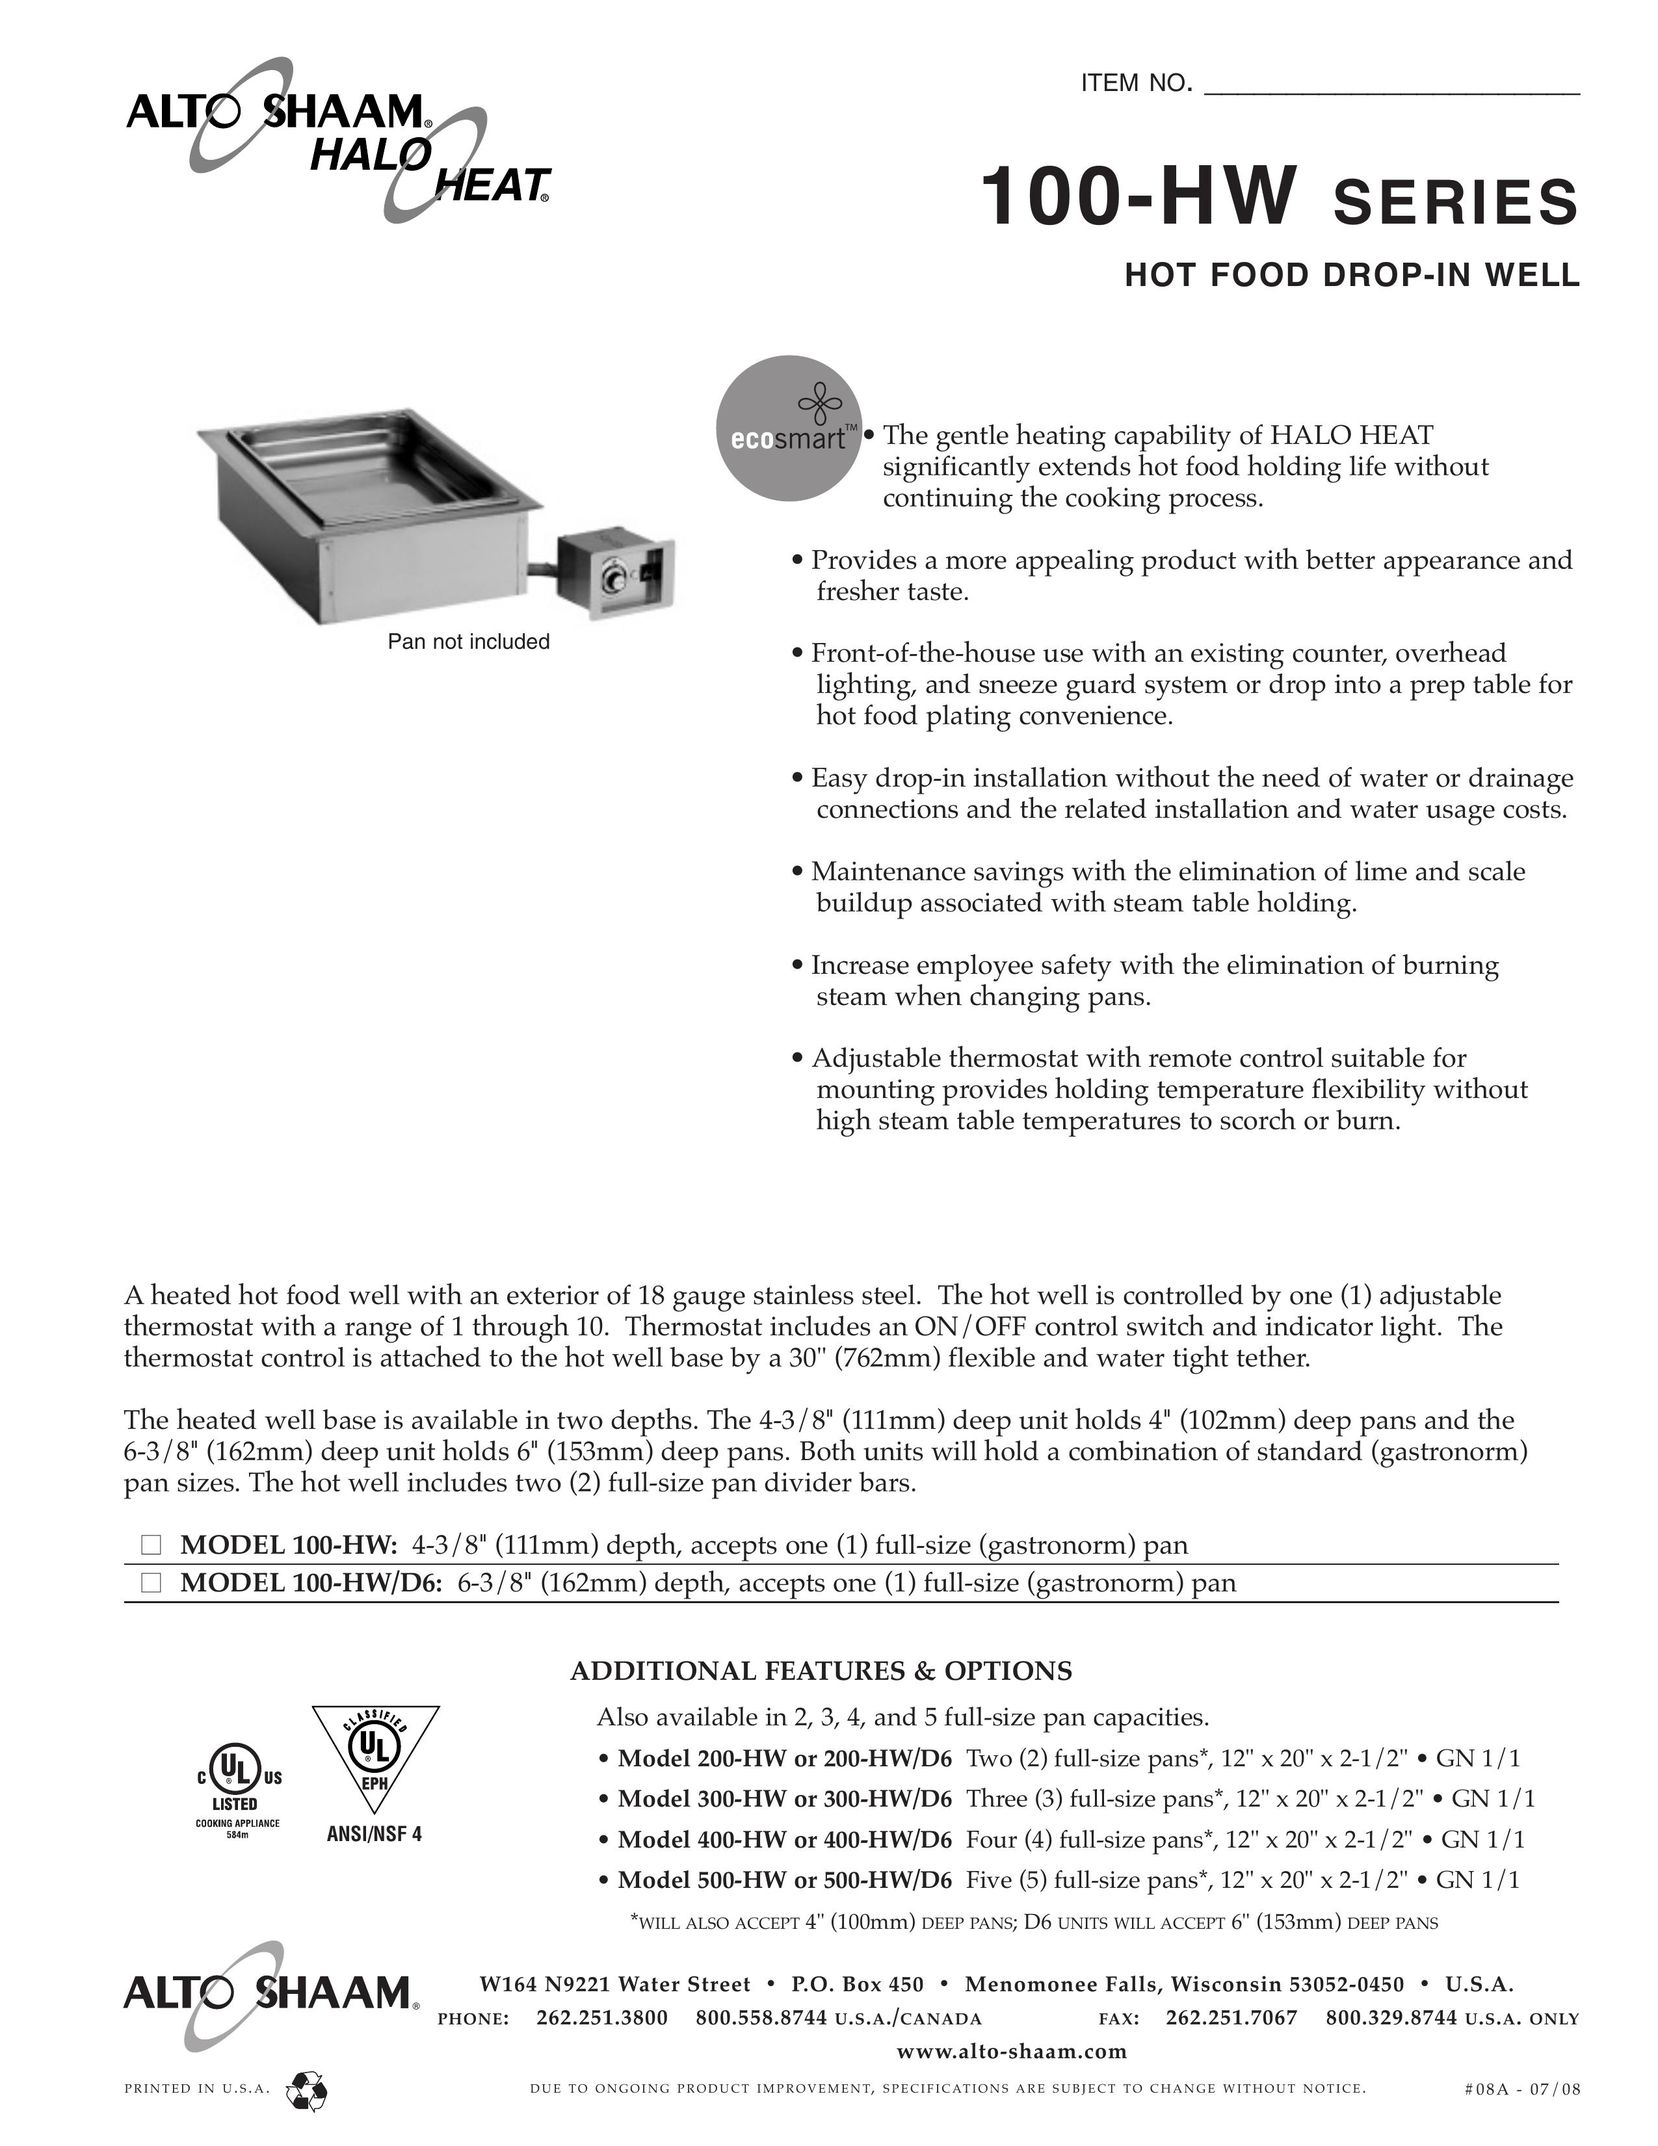 Alto-Shaam 100-HW SERIES Oven User Manual